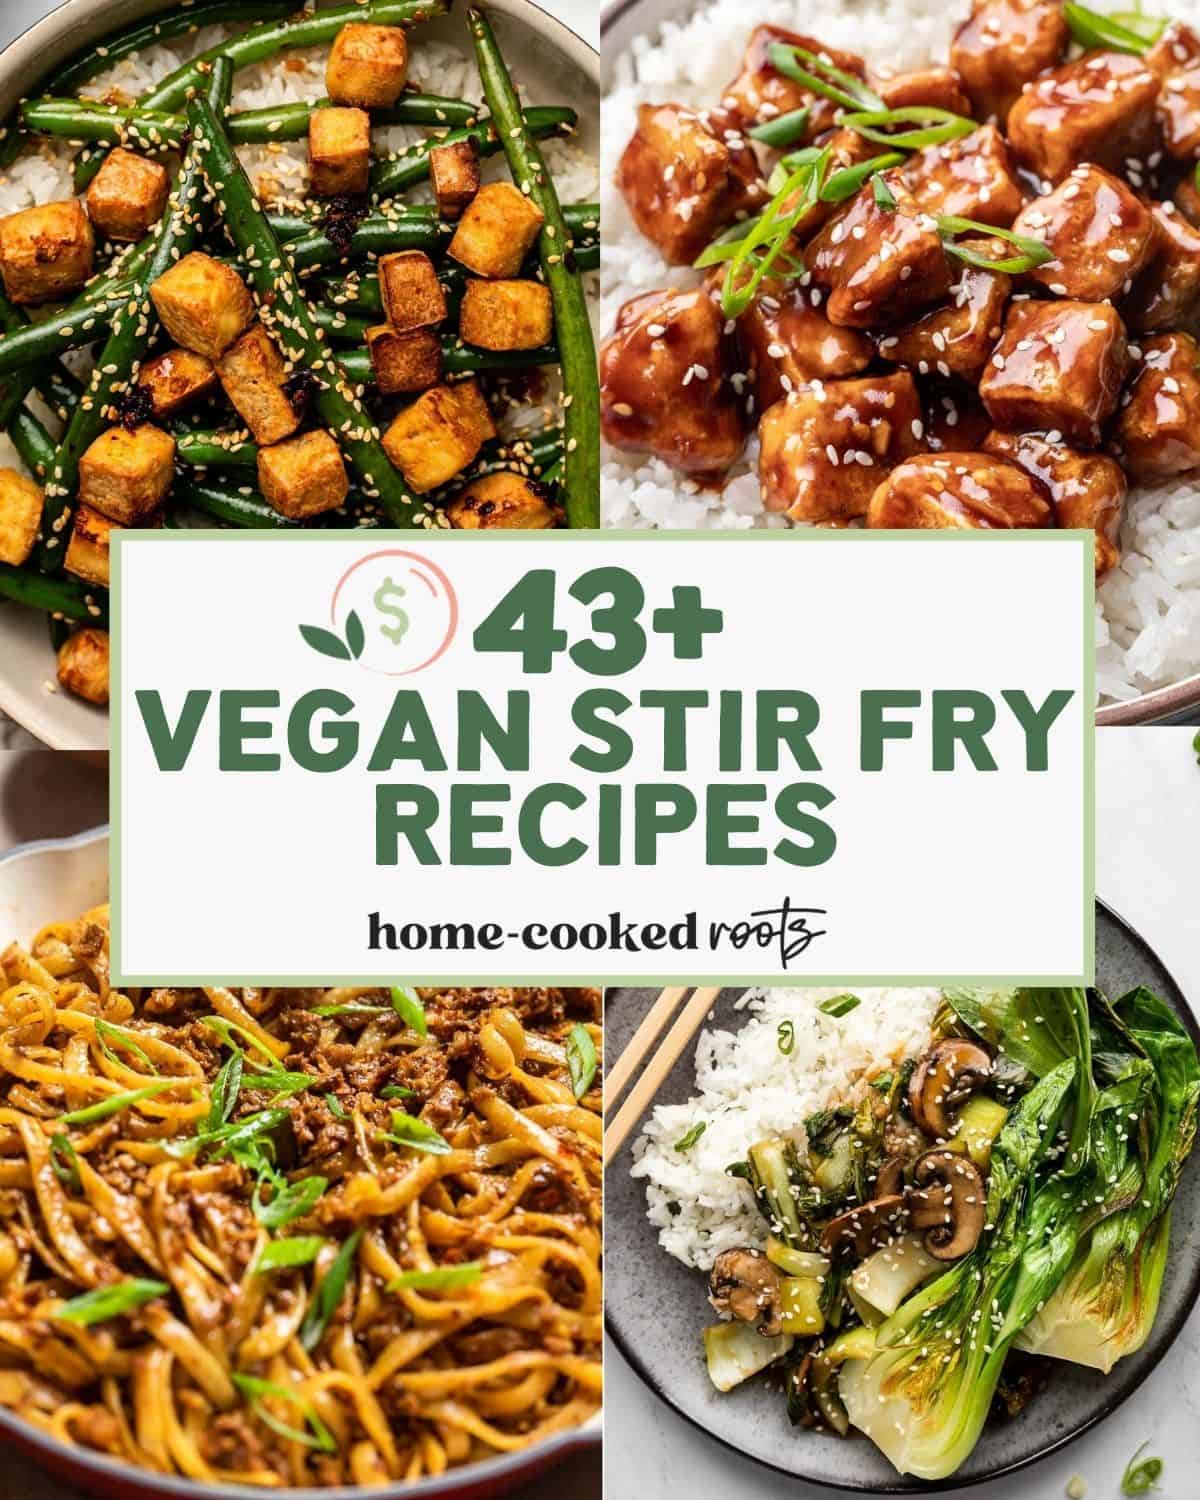 Vegan Stir Fry Recipes collage of 4 images. 